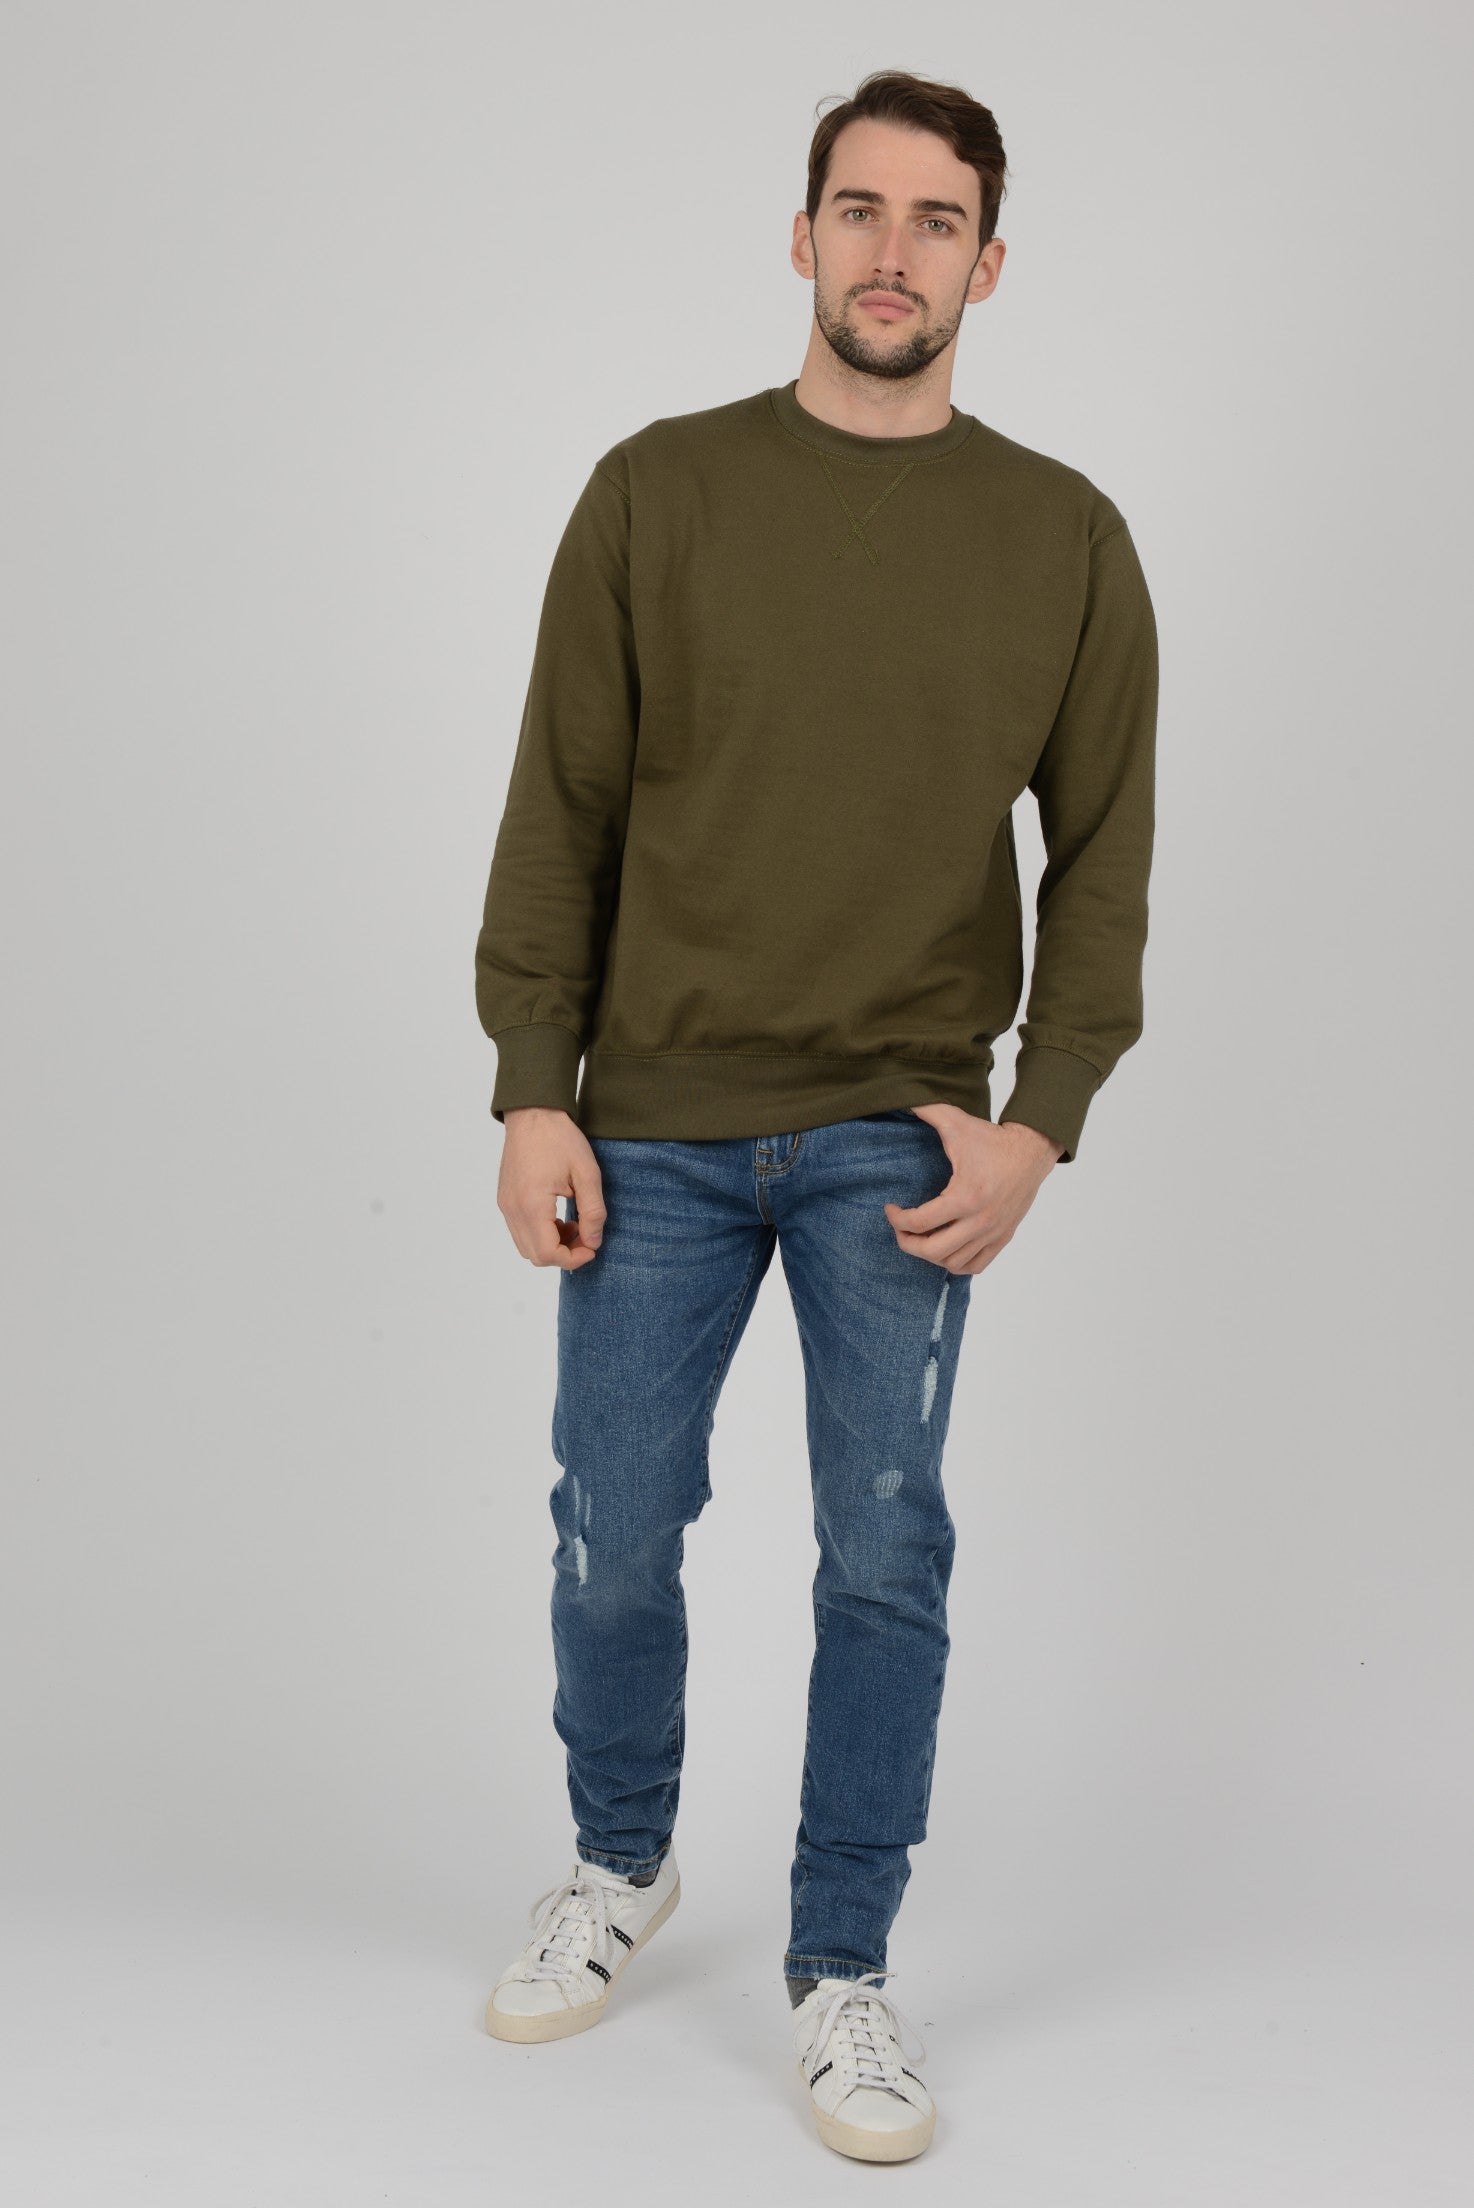 Mens-Plain-Fleece-Sweatshirt-Jumper-Olive-Green